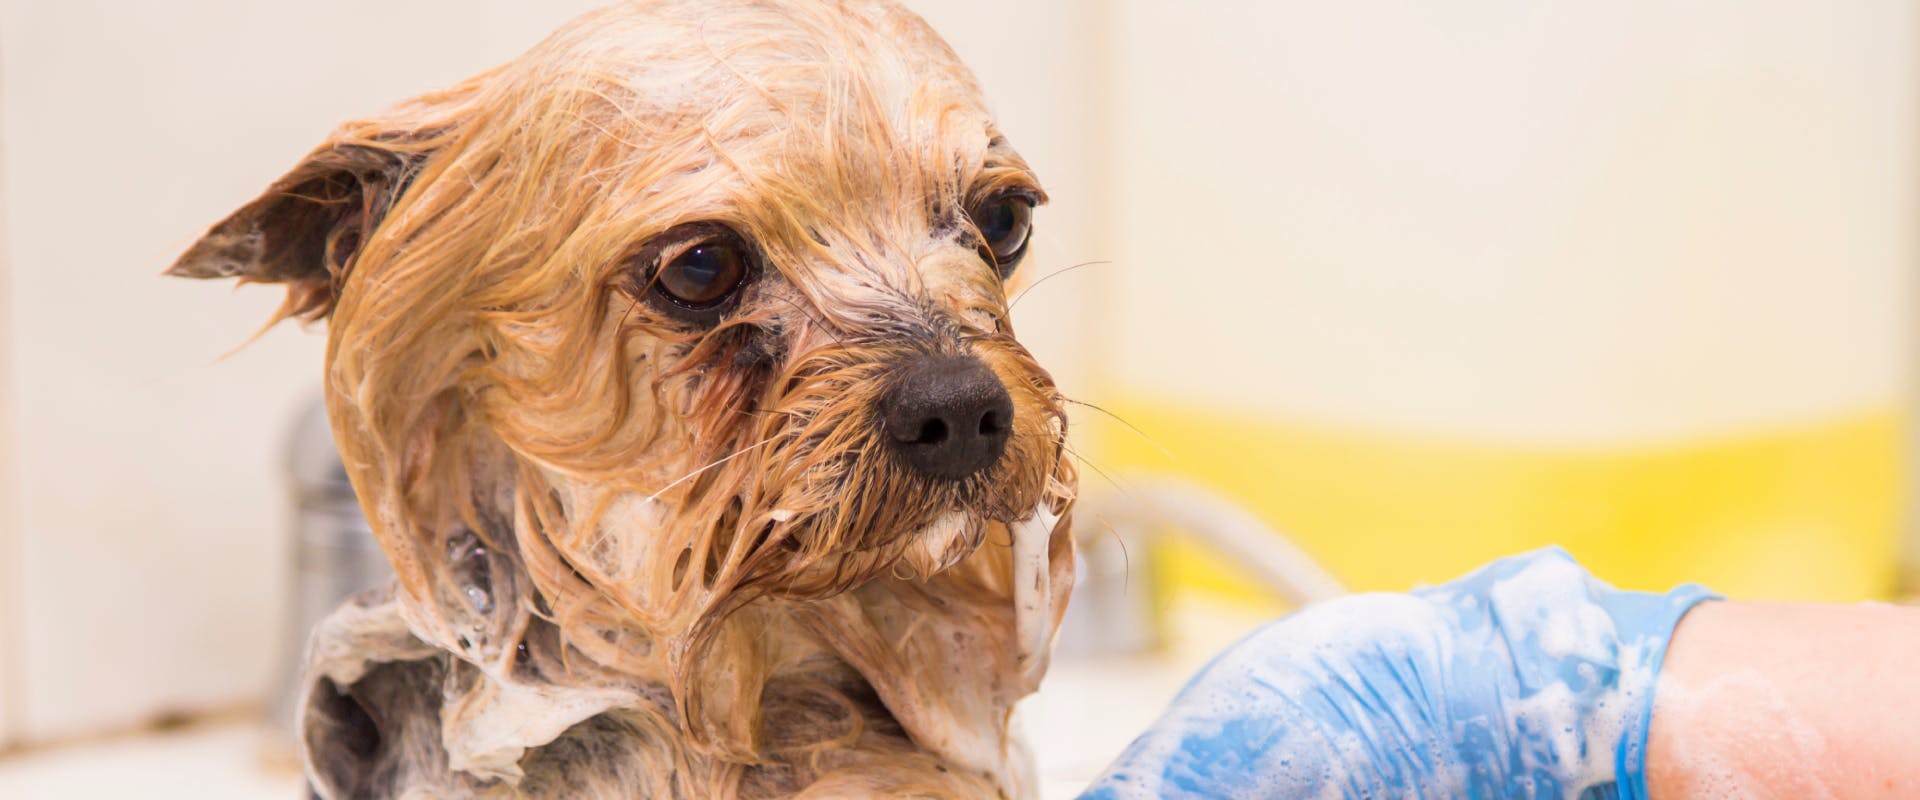 A dog enjoys a baking soda bath.